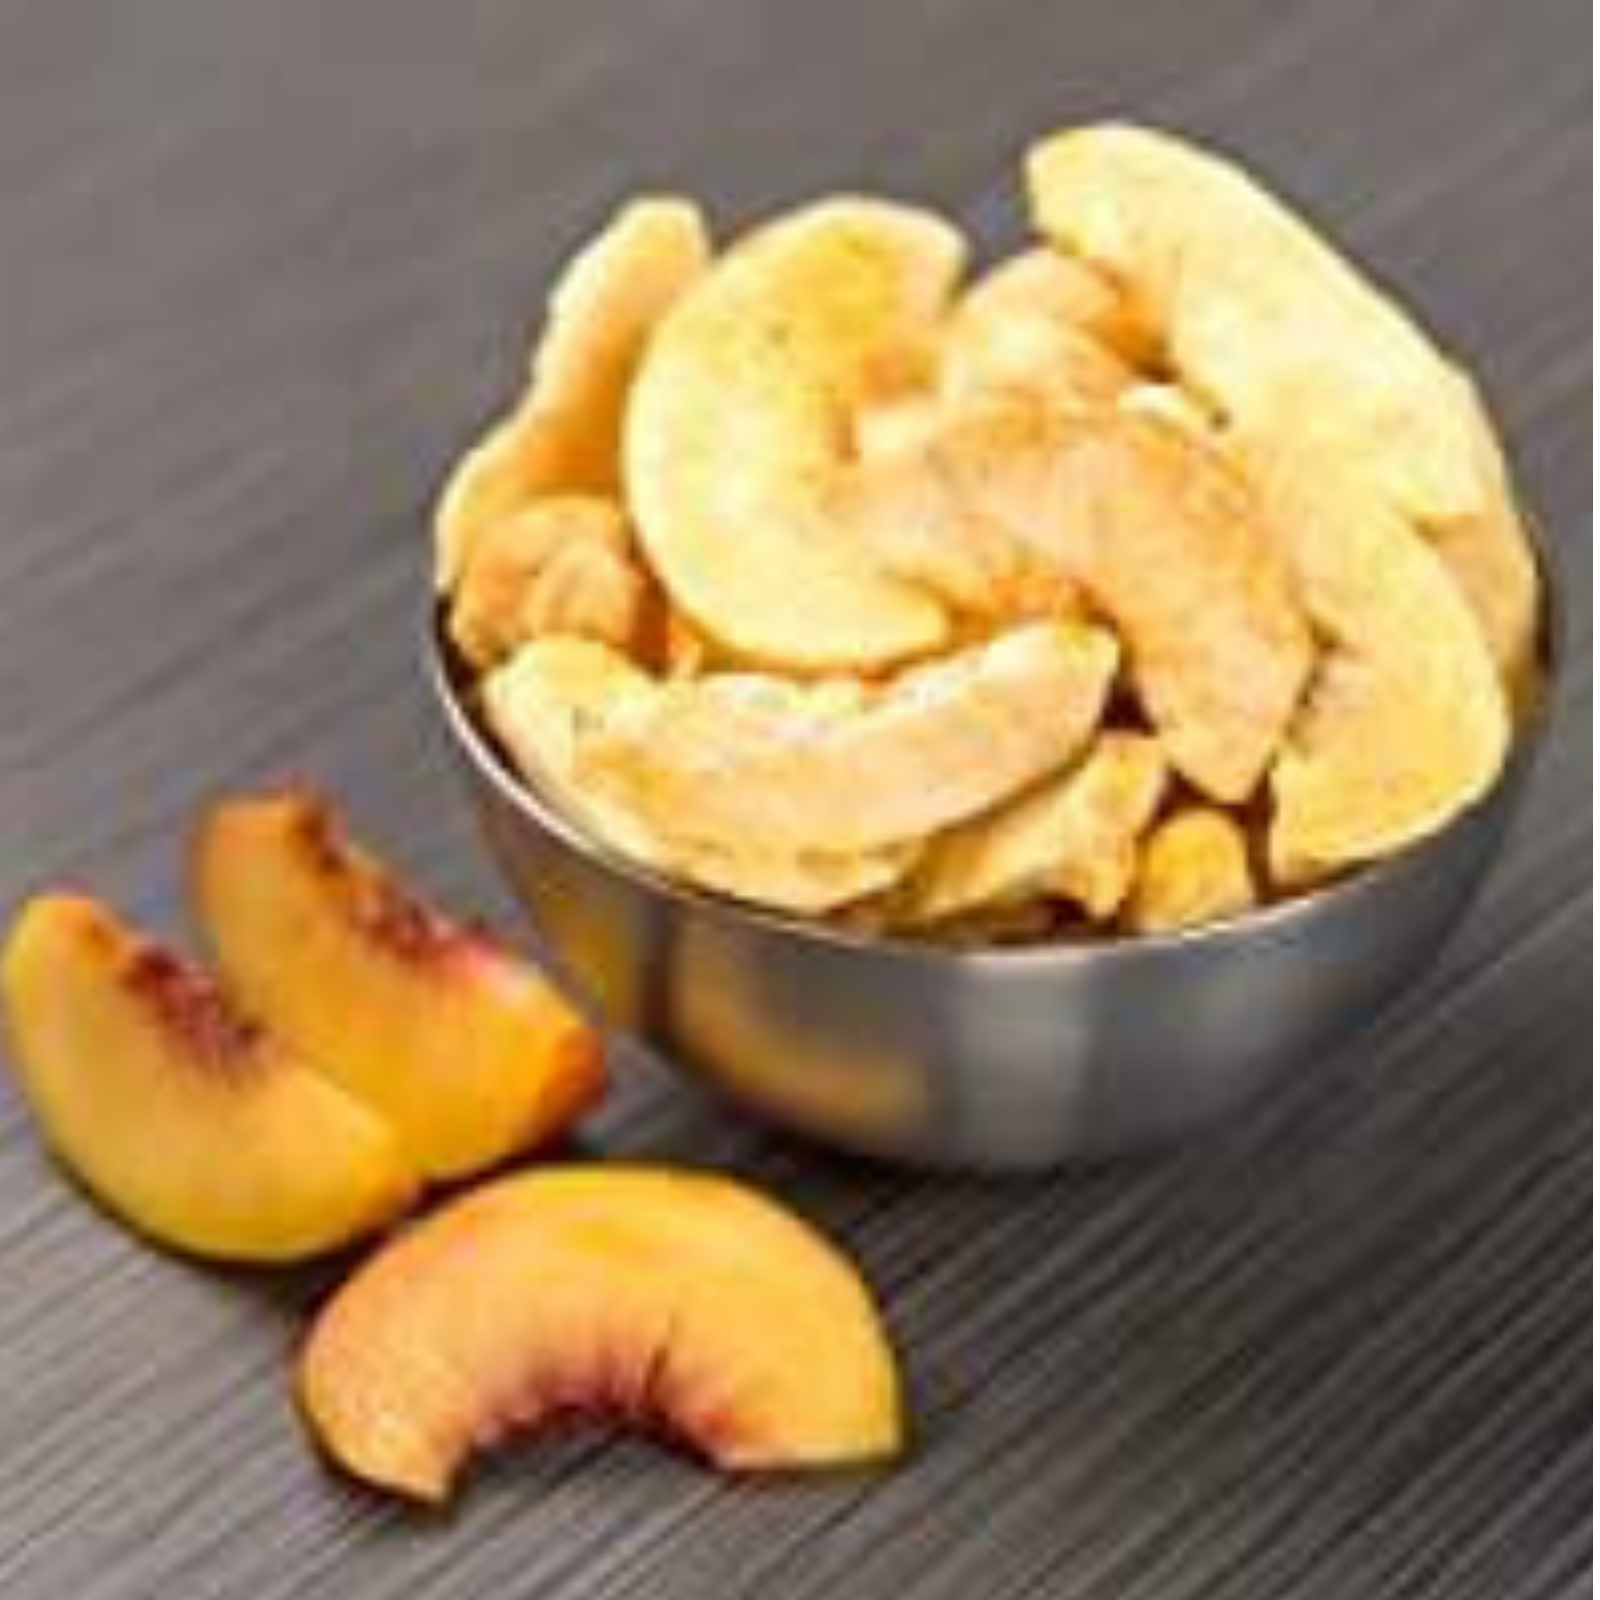 Nutristore Freeze Dried Peaches | 100% Natural, Healthy Fruit Snacks | Bulk #10 Can | Premium Quality & Crispy Fresh Taste | Emergency Survival Food Supply | 24 Servings | 25 Year Shelf Life